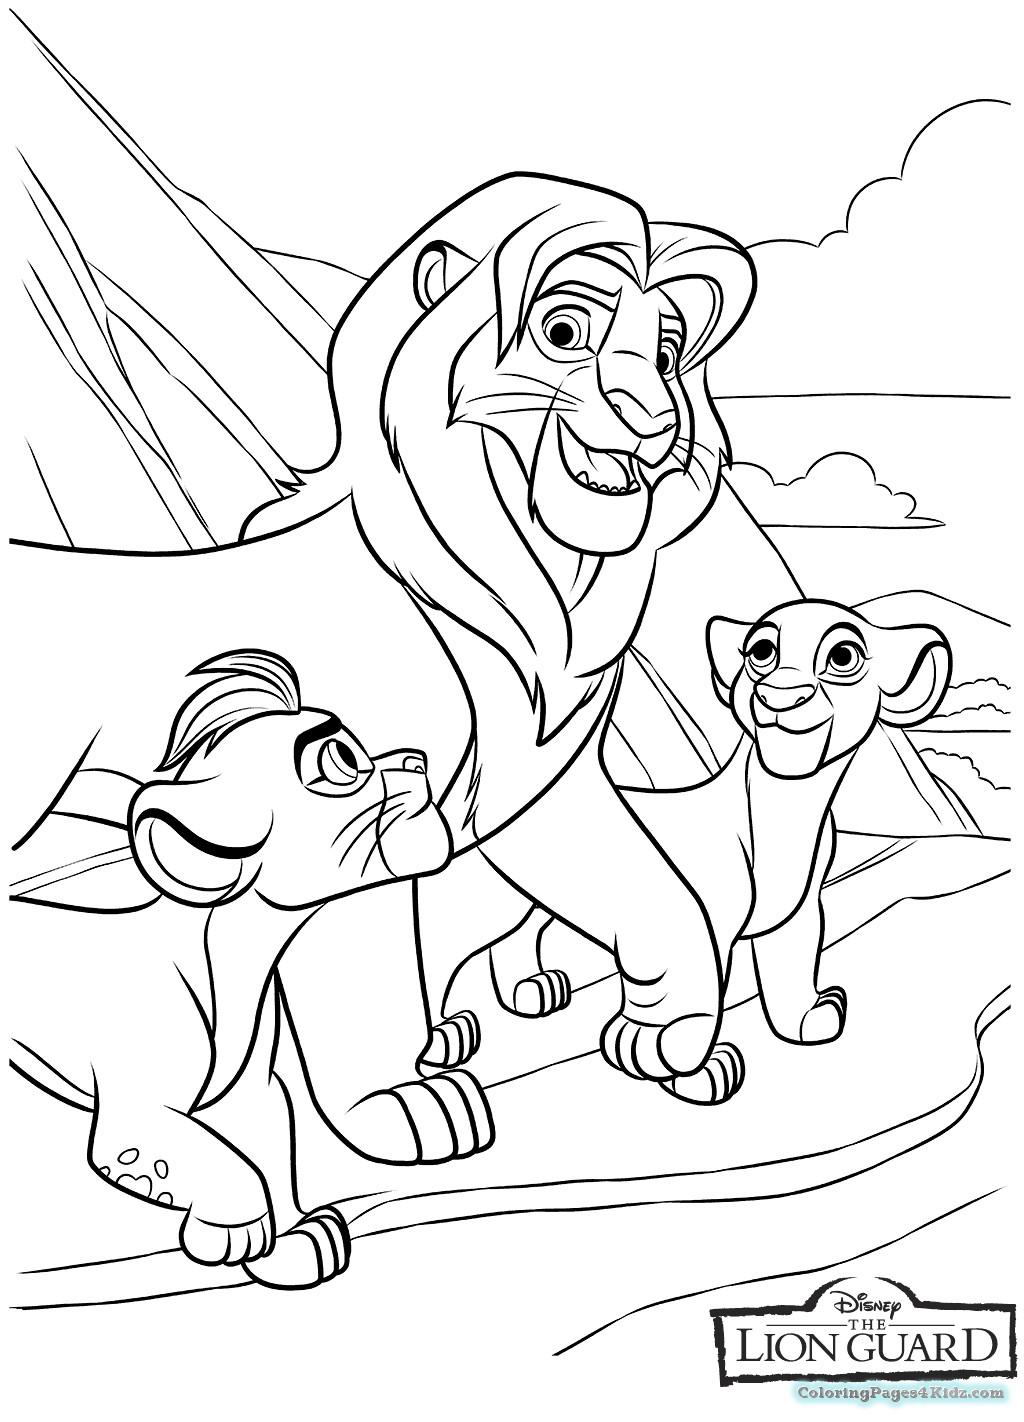 Best ideas about Lion Guard Coloring Pages
. Save or Pin The Lion Guard Coloring Pages Now.